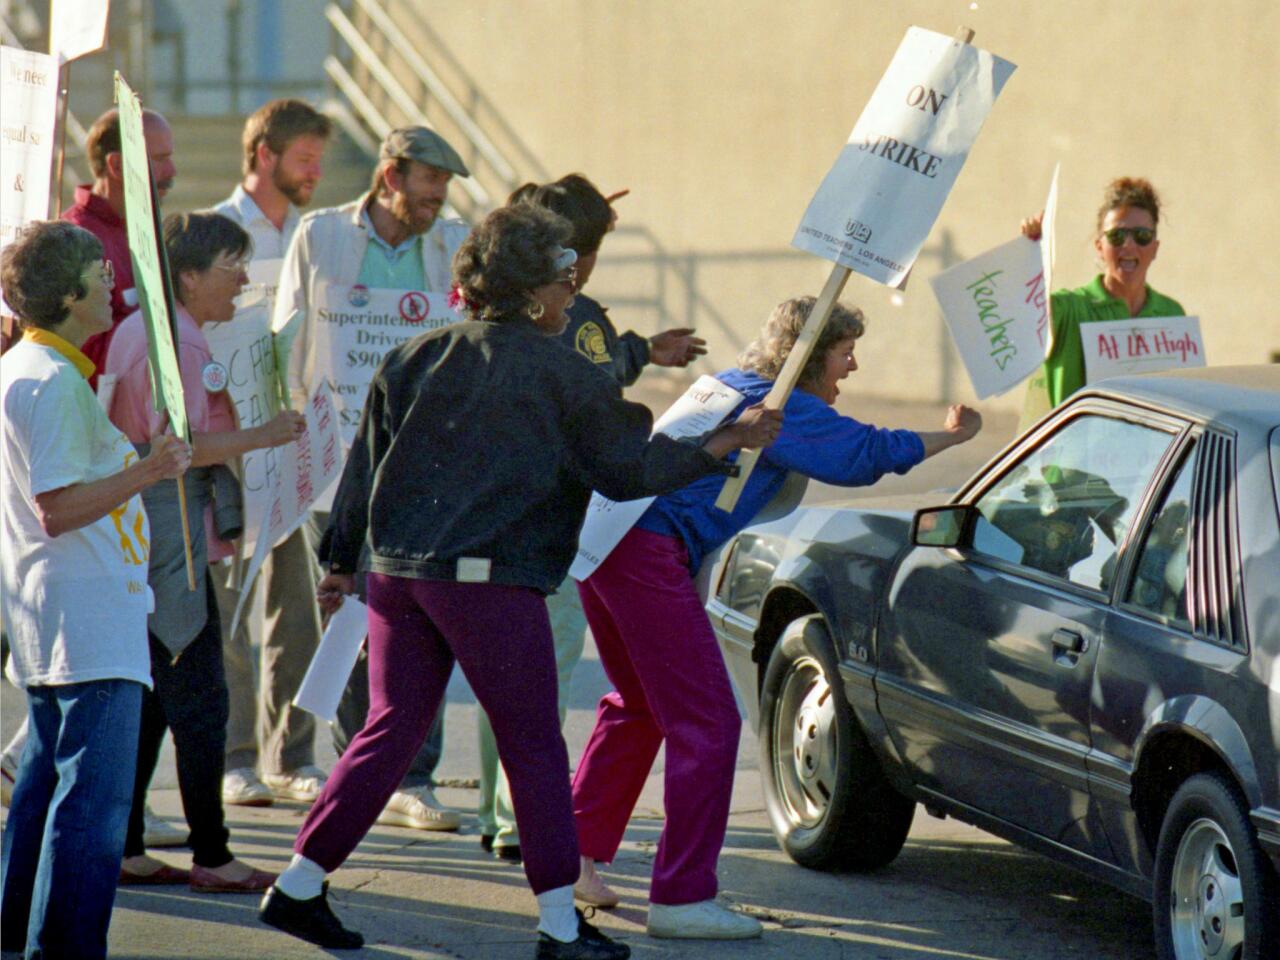 May 23, 1989: Striking teachers challenge car entering parking lot at Los Angeles High School during 1989 LAUSD teachers' strike.